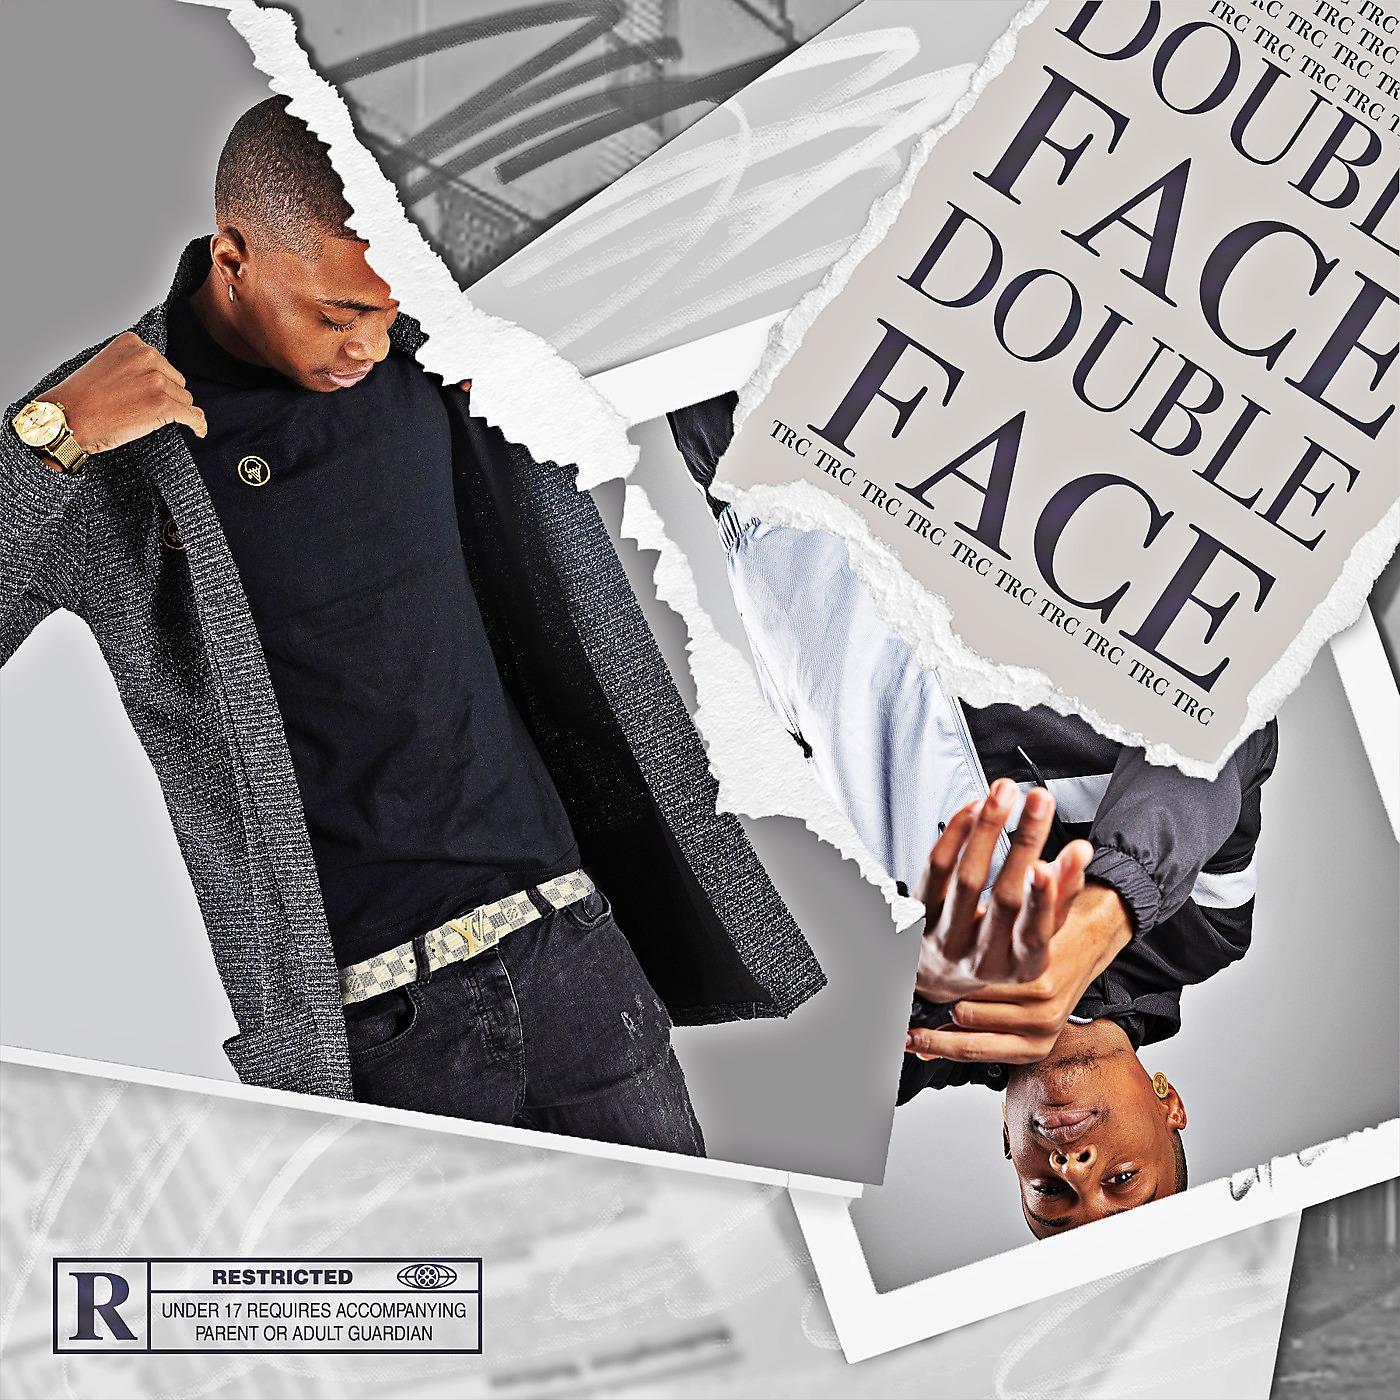 Постер альбома Double Face